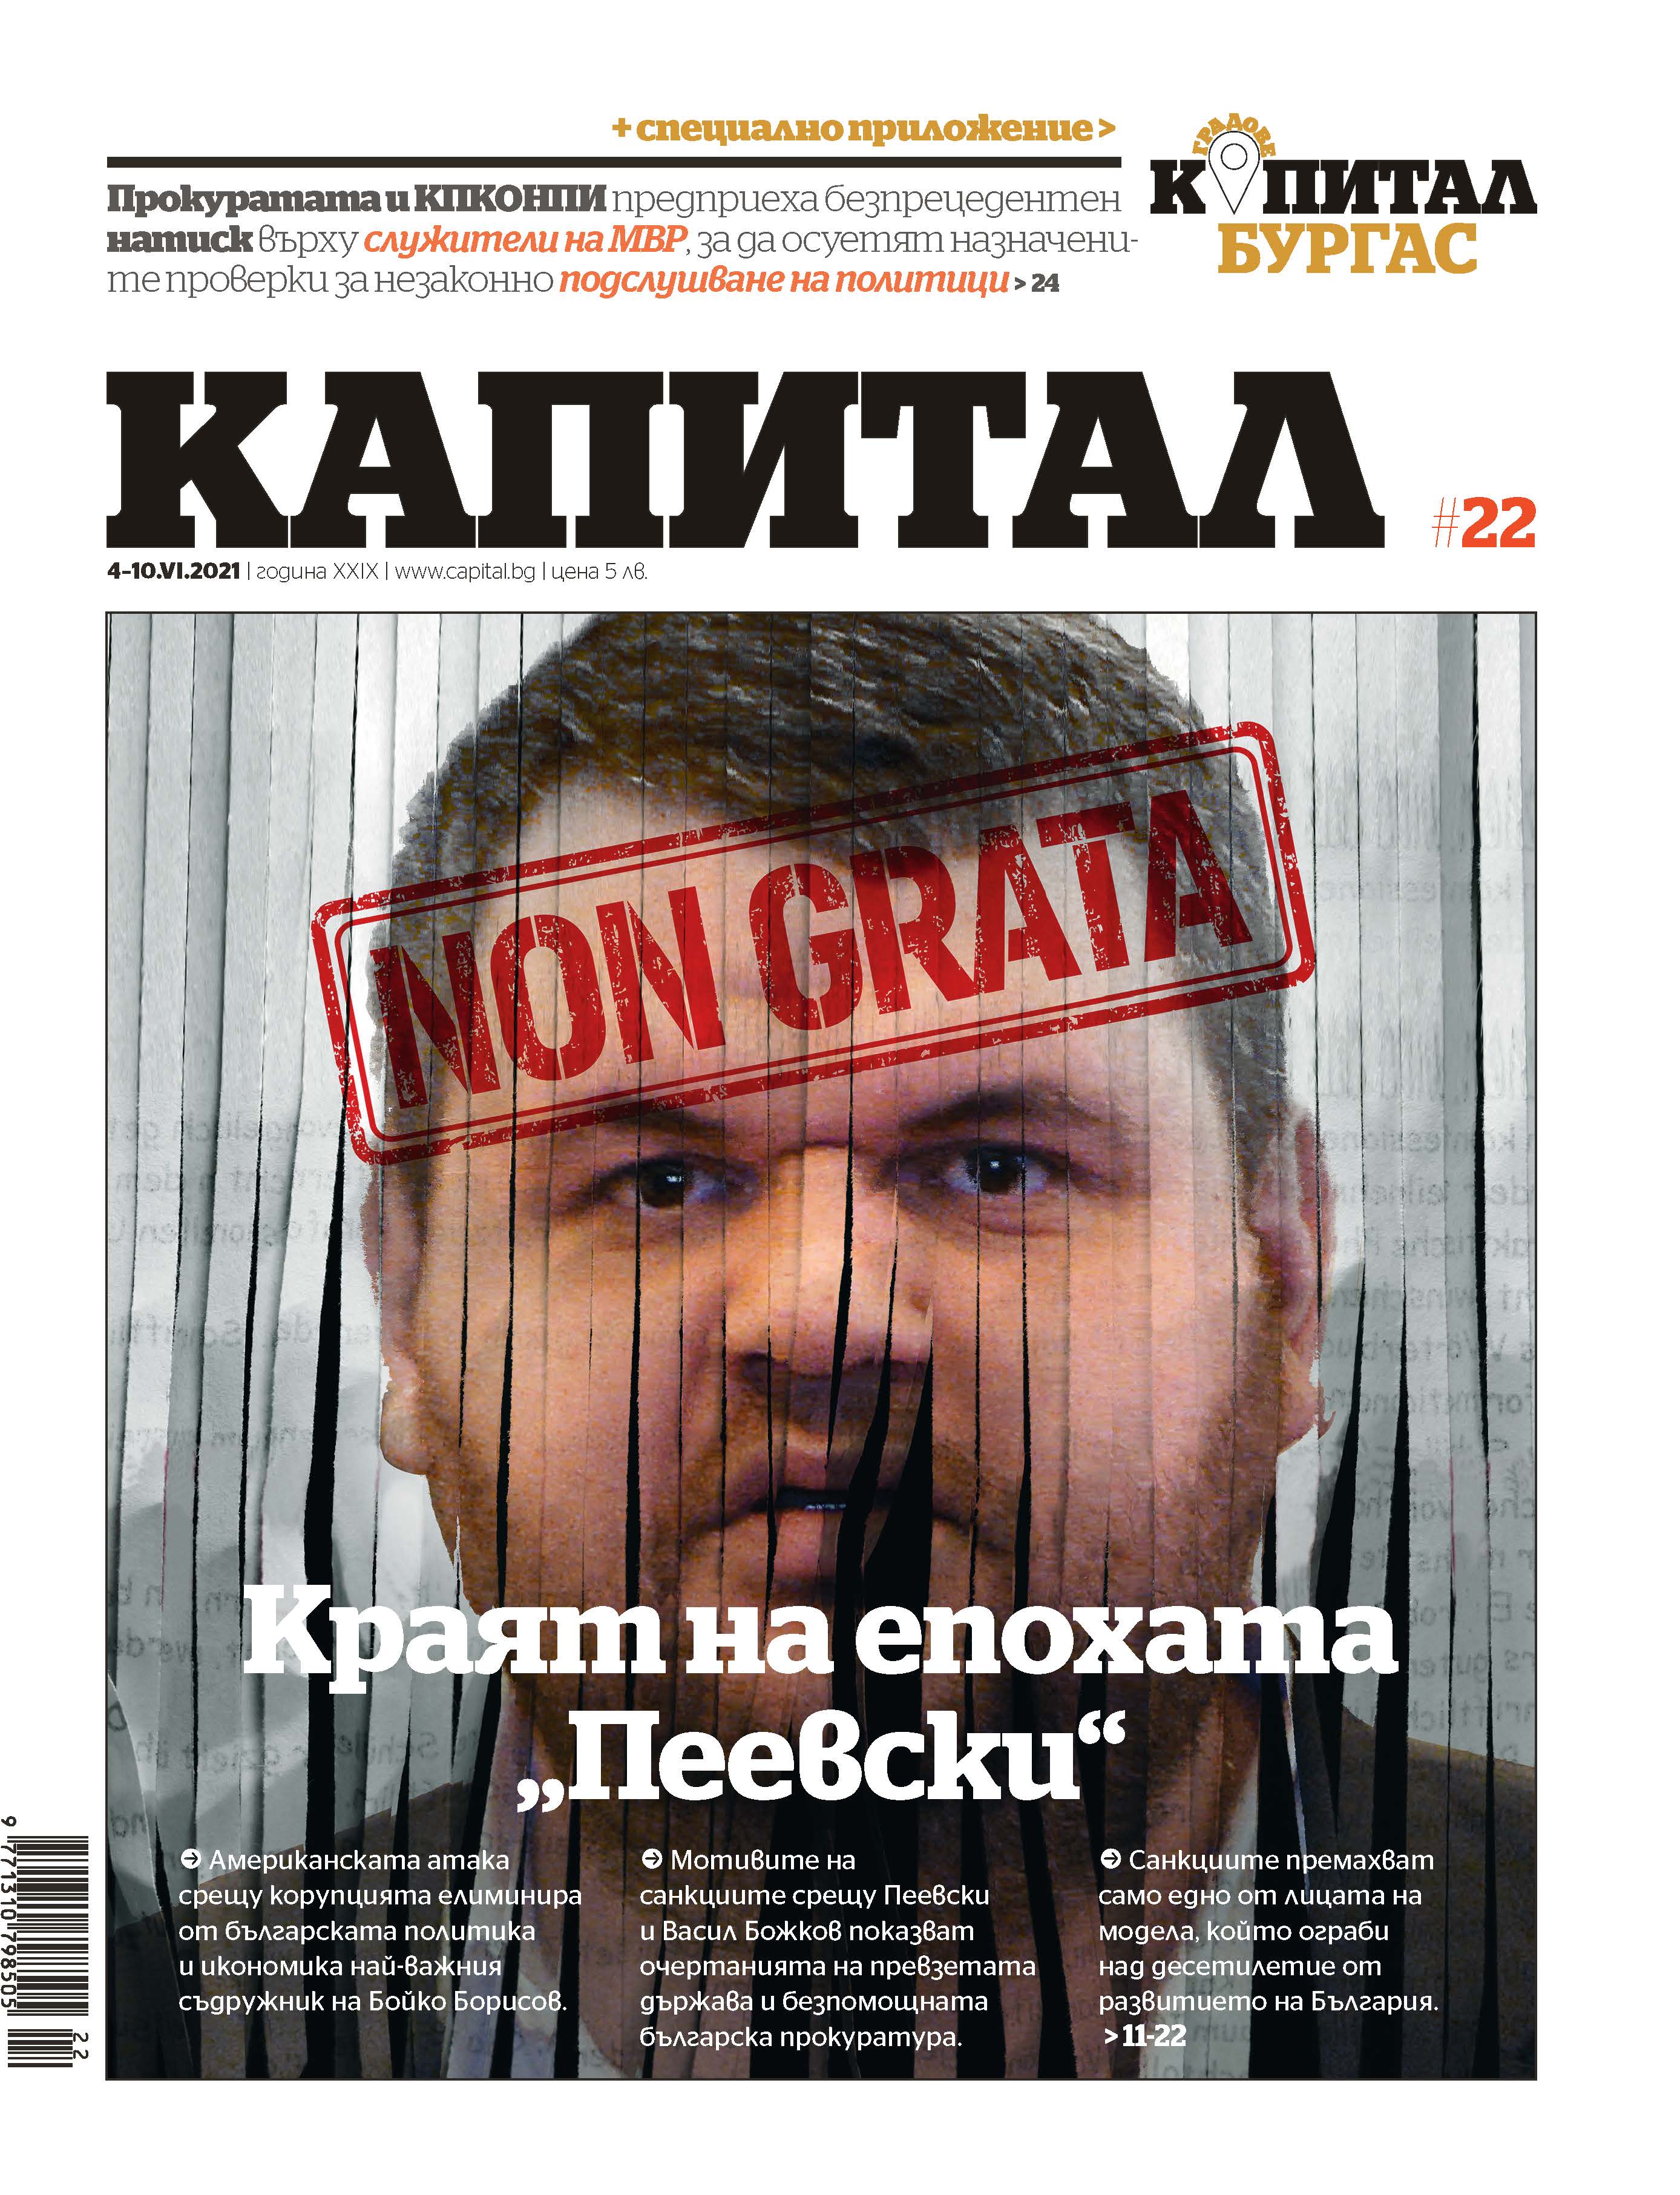 Peevski Non-grata - the US Sanctions Against Bulgarian Corruption